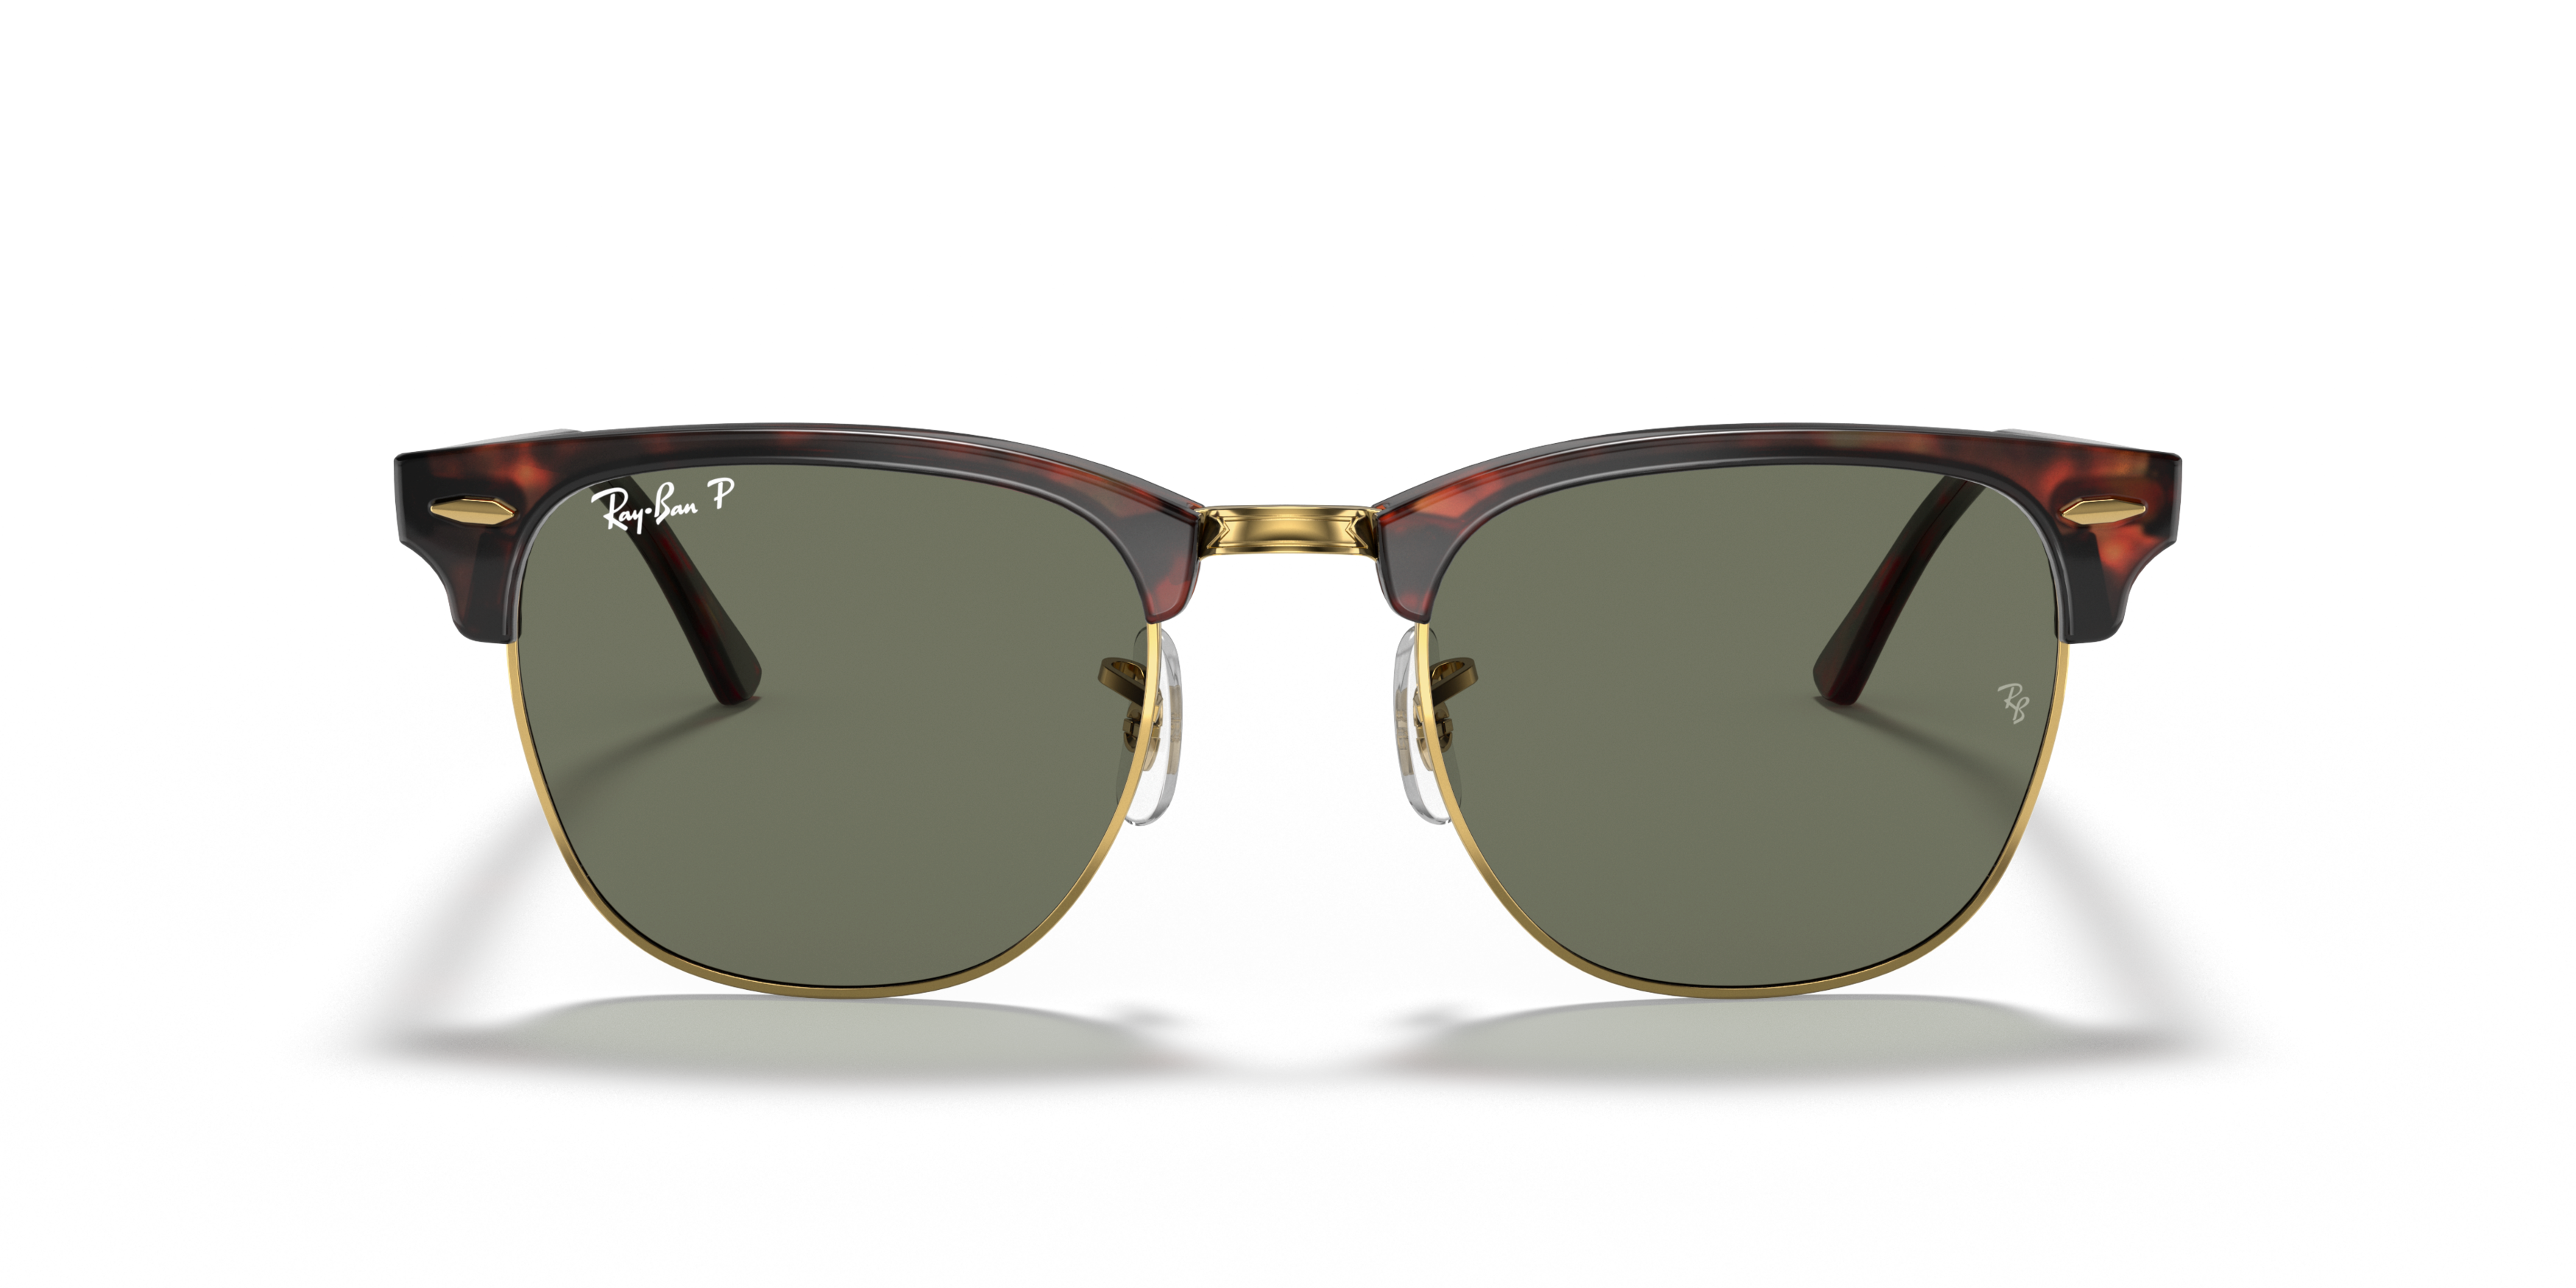 Front Ray-Ban RB 3016 (990/58) Sunglasses Green / Havana